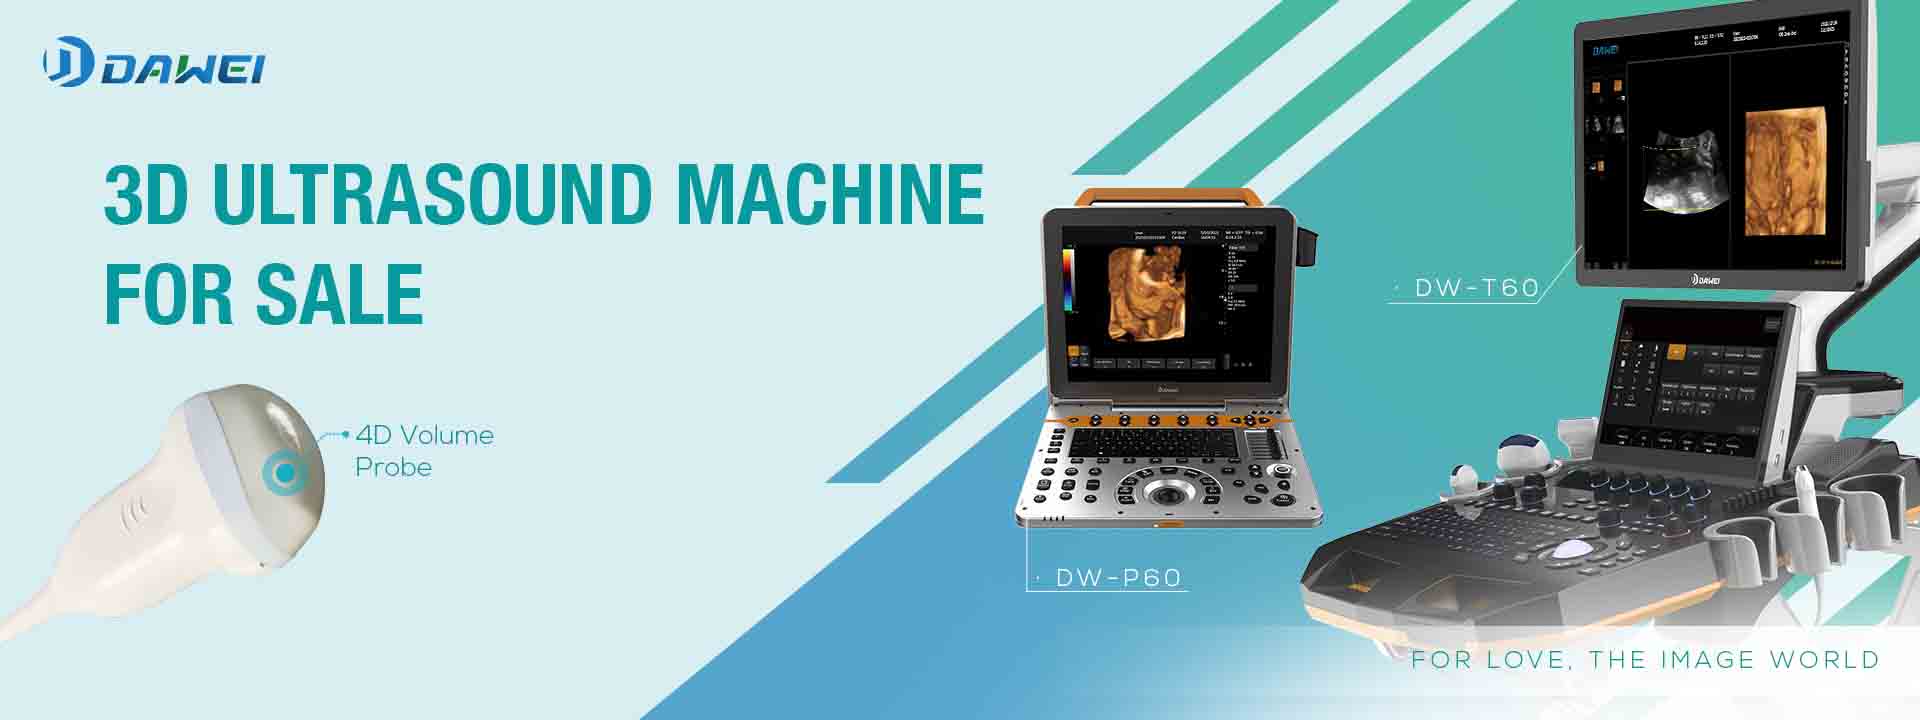 Dawei Medical 3D Ultrasound Machine Inauzwa